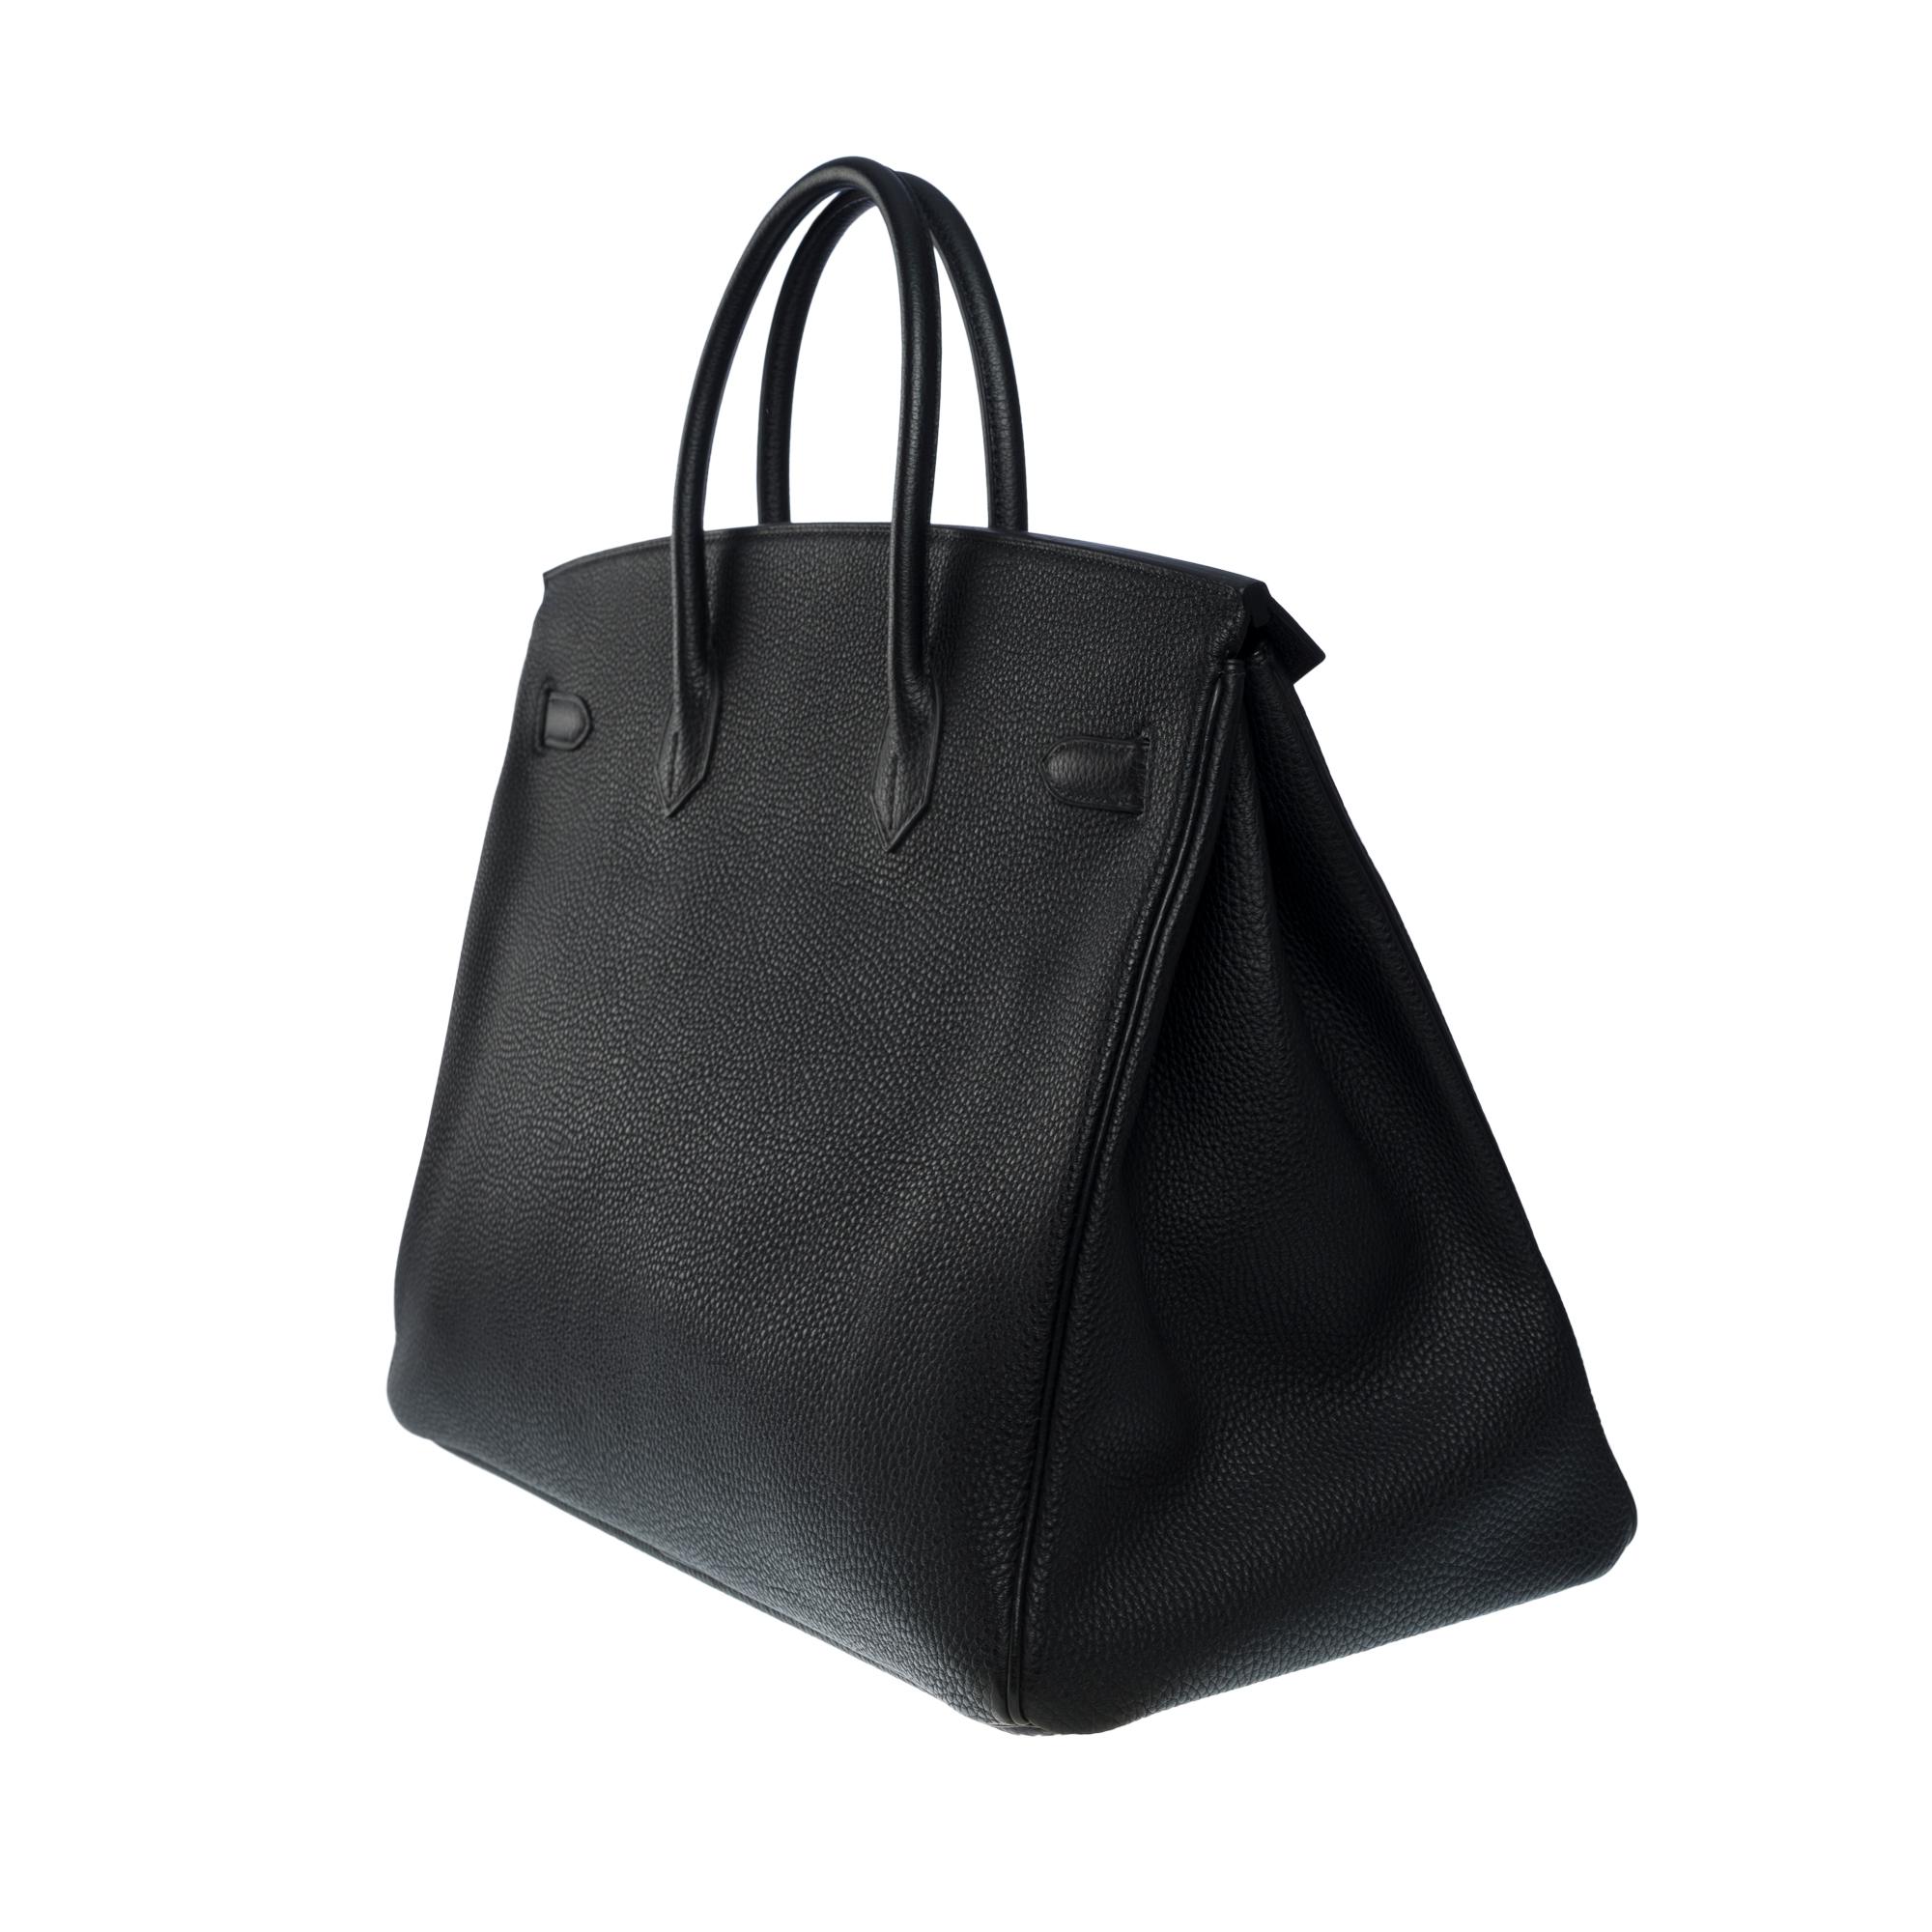 Women's or Men's Stunning Hermes Birkin 40cm handbag in Black Togo leather, SHW